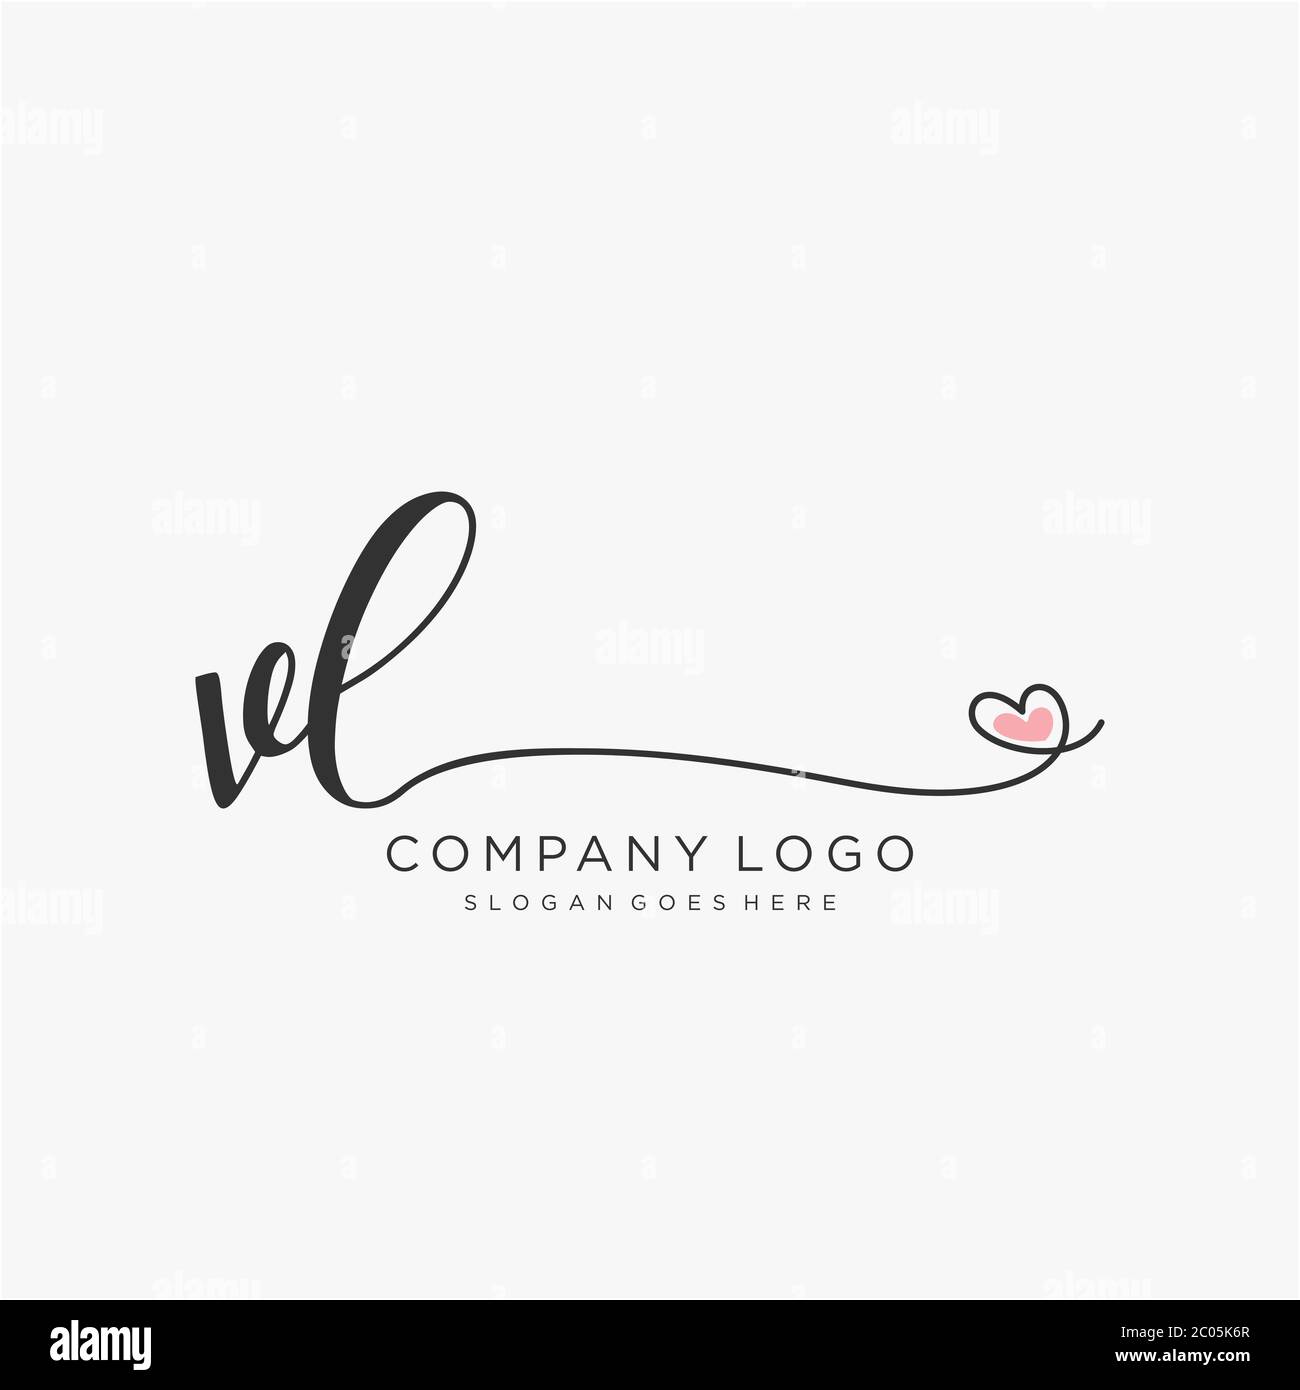 VL Initial handwriting logo design with circle. Beautyful design